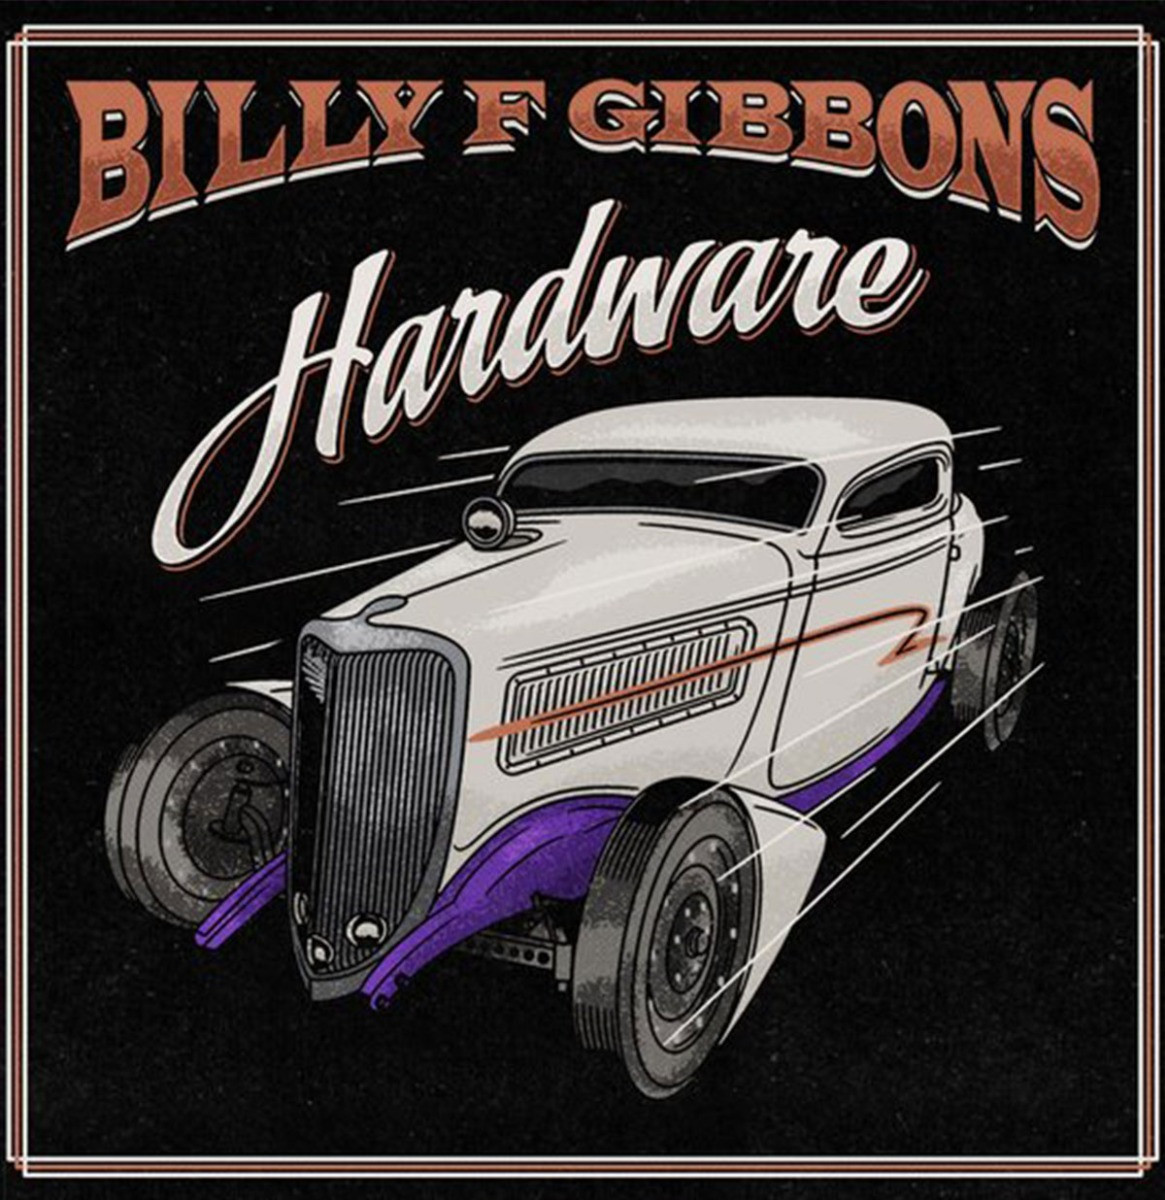 Billy F Gibbons - Hardware LP